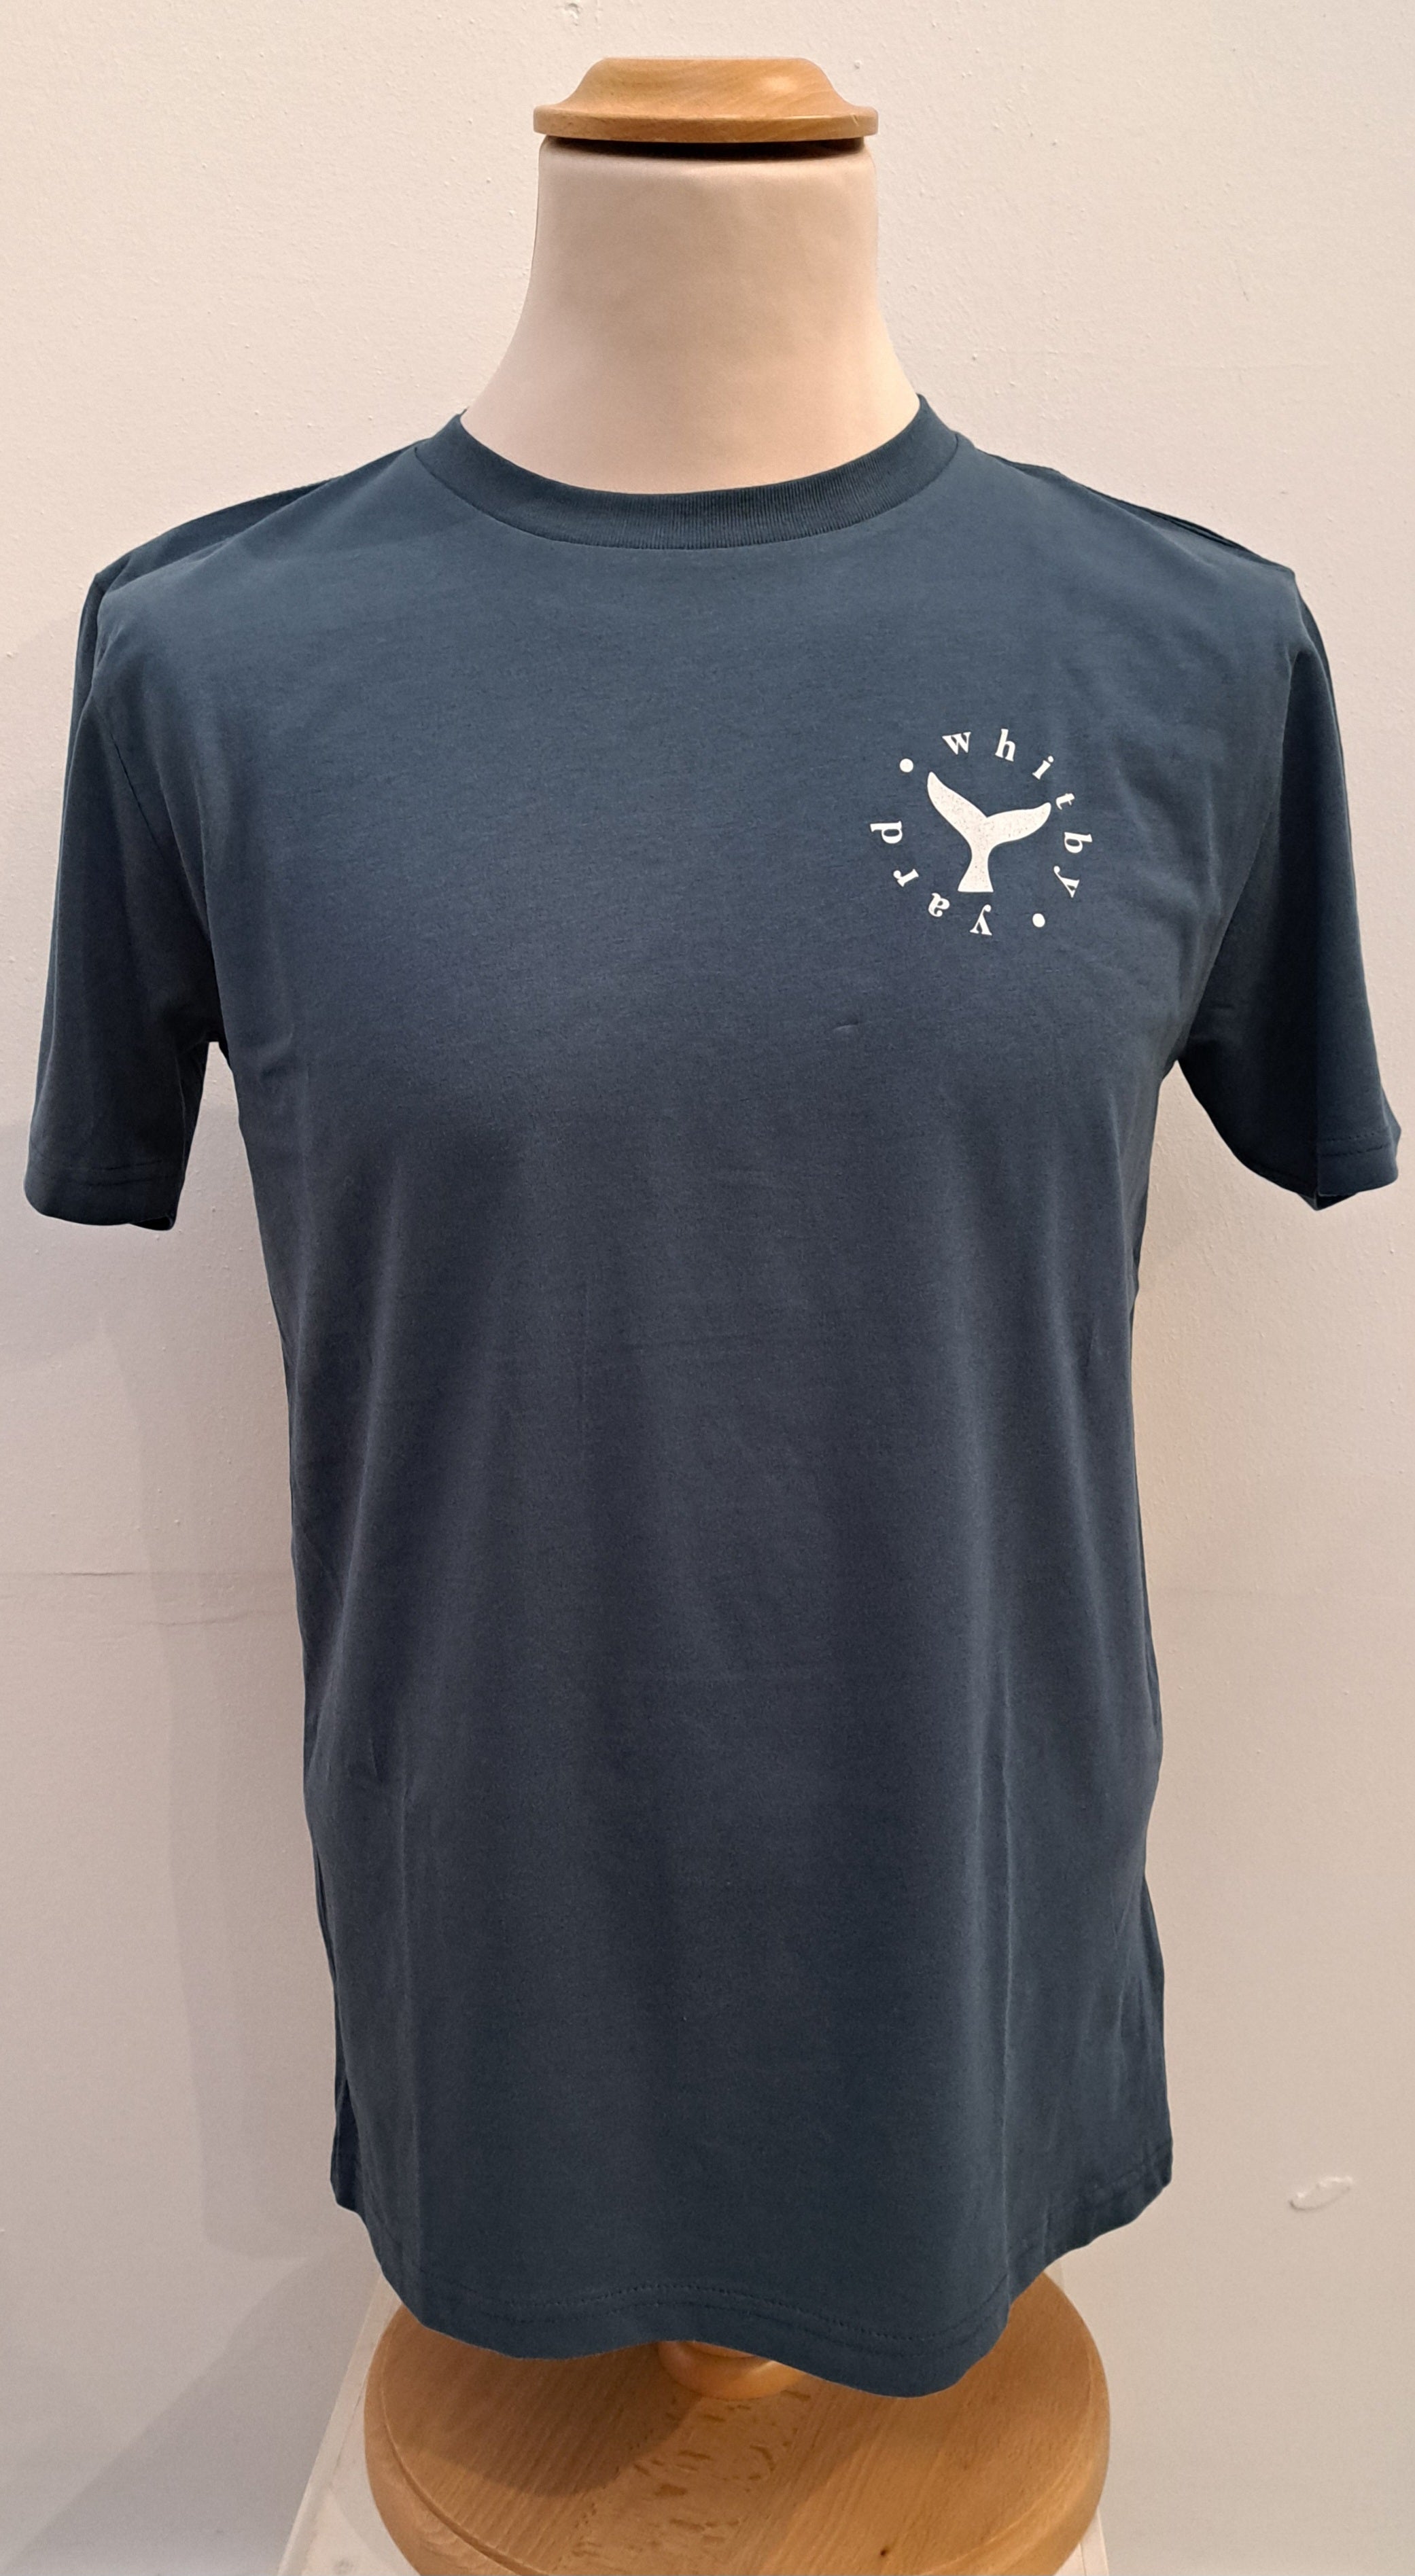 Unisex Saltburn Fin Design T shirt in Denim Blue